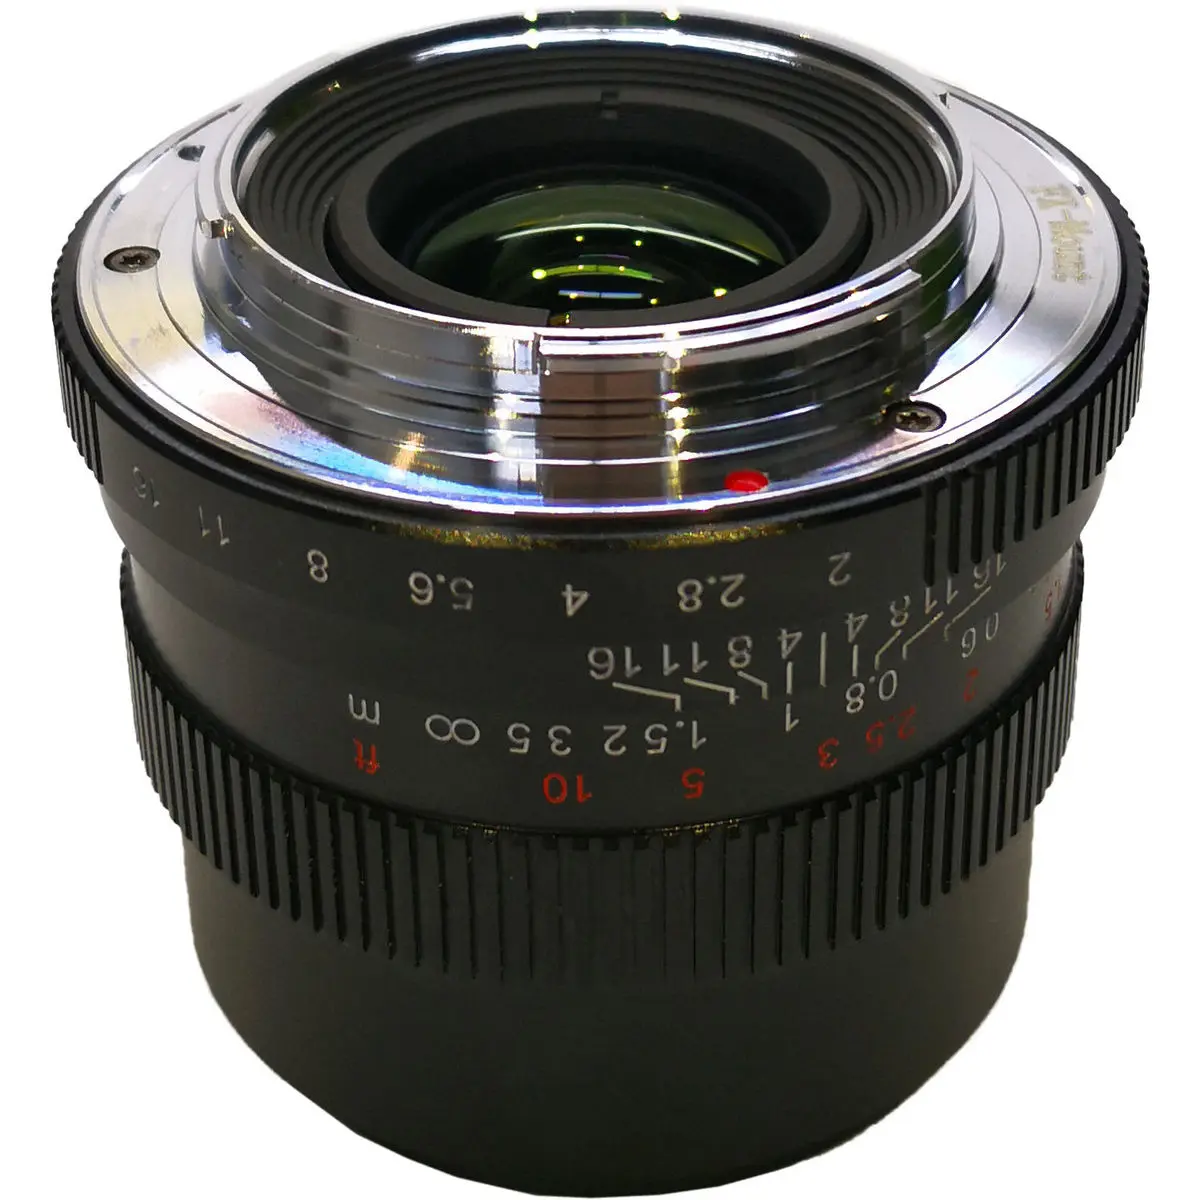 2. 7Artisans 35mm F2.0 MF (Fuji X) Black (A203B) Lens